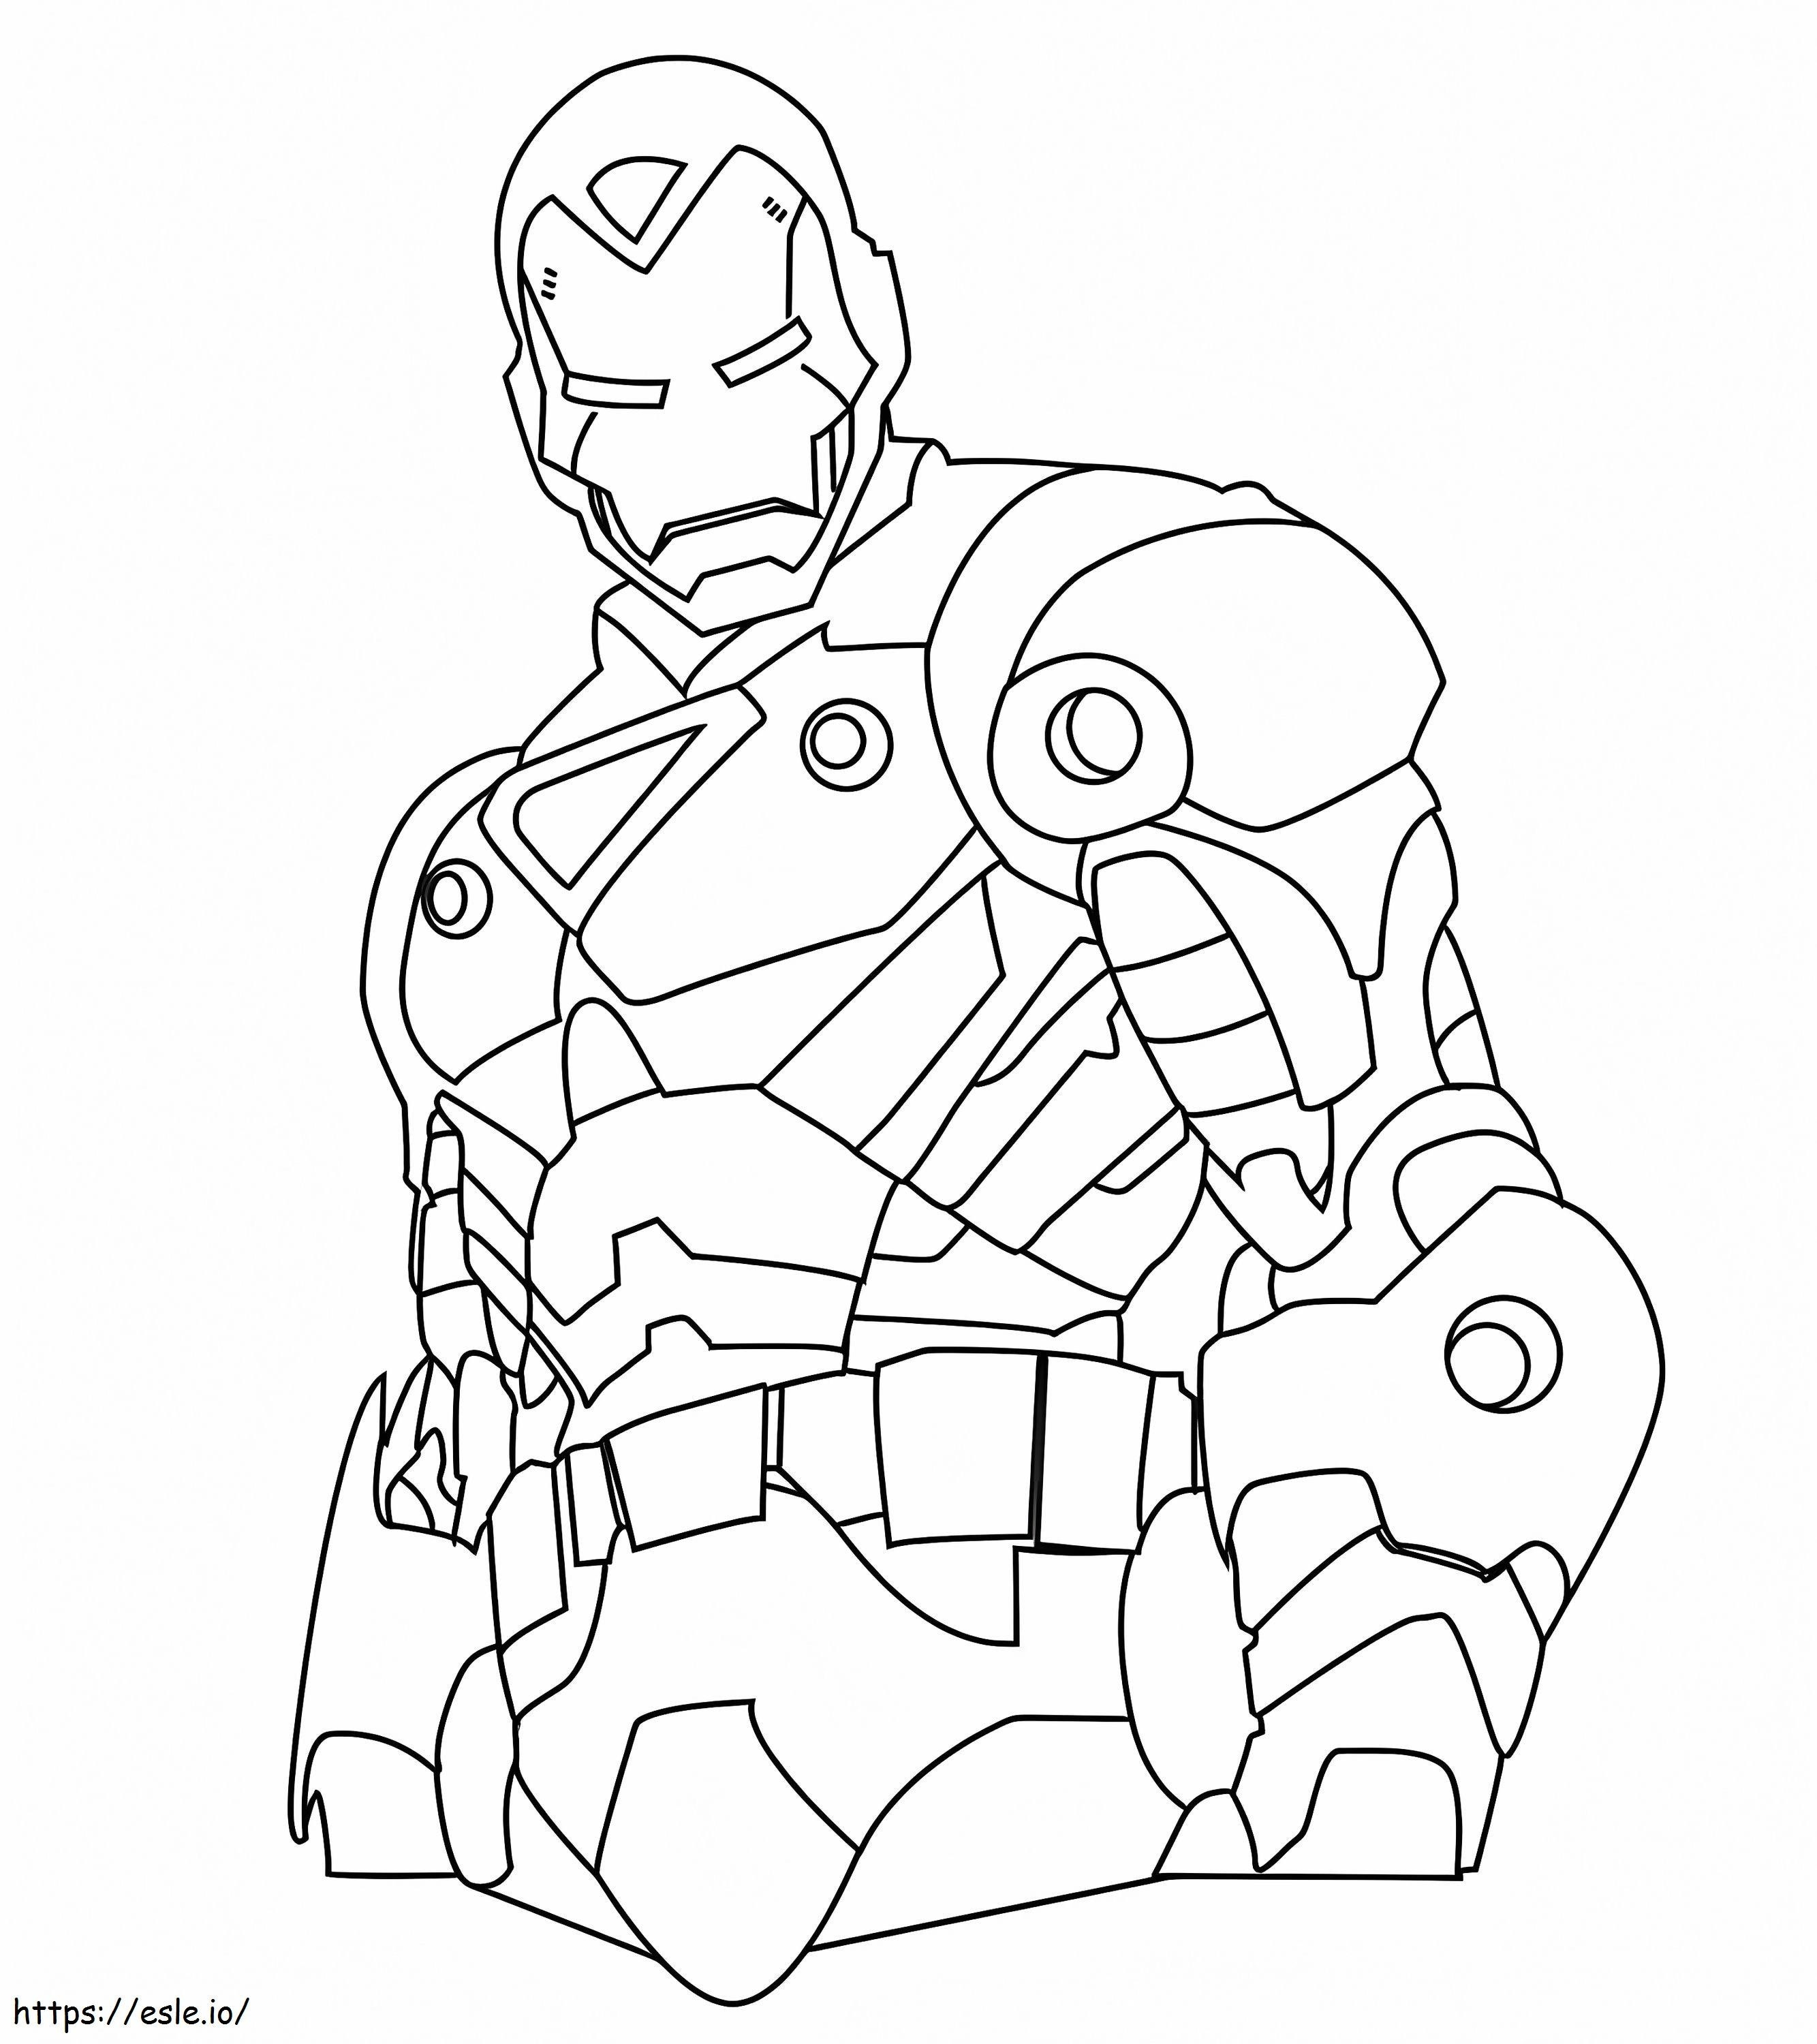 Cara de Homem de Ferro para colorir